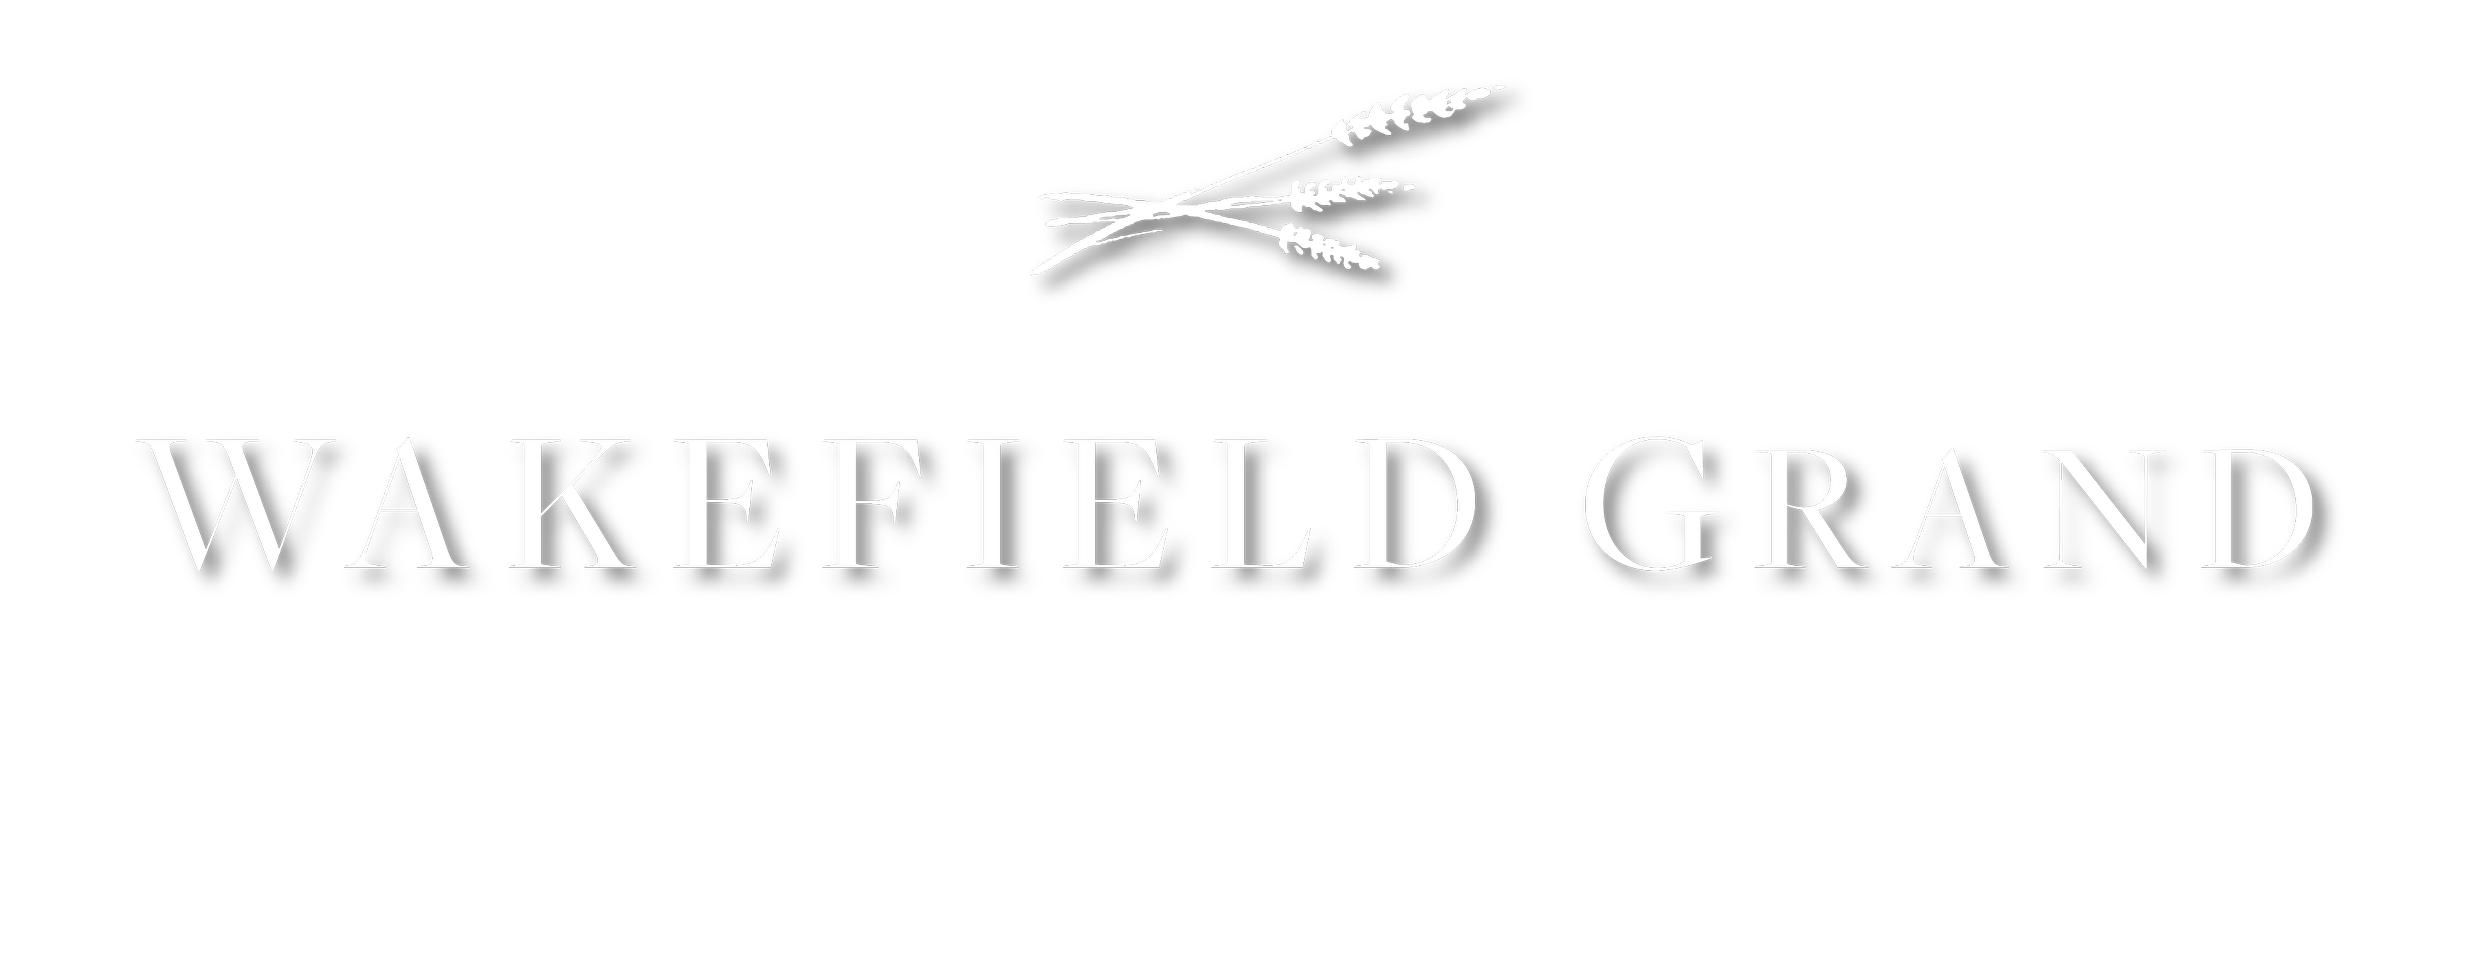 Wakfield-Grand-Logo.png